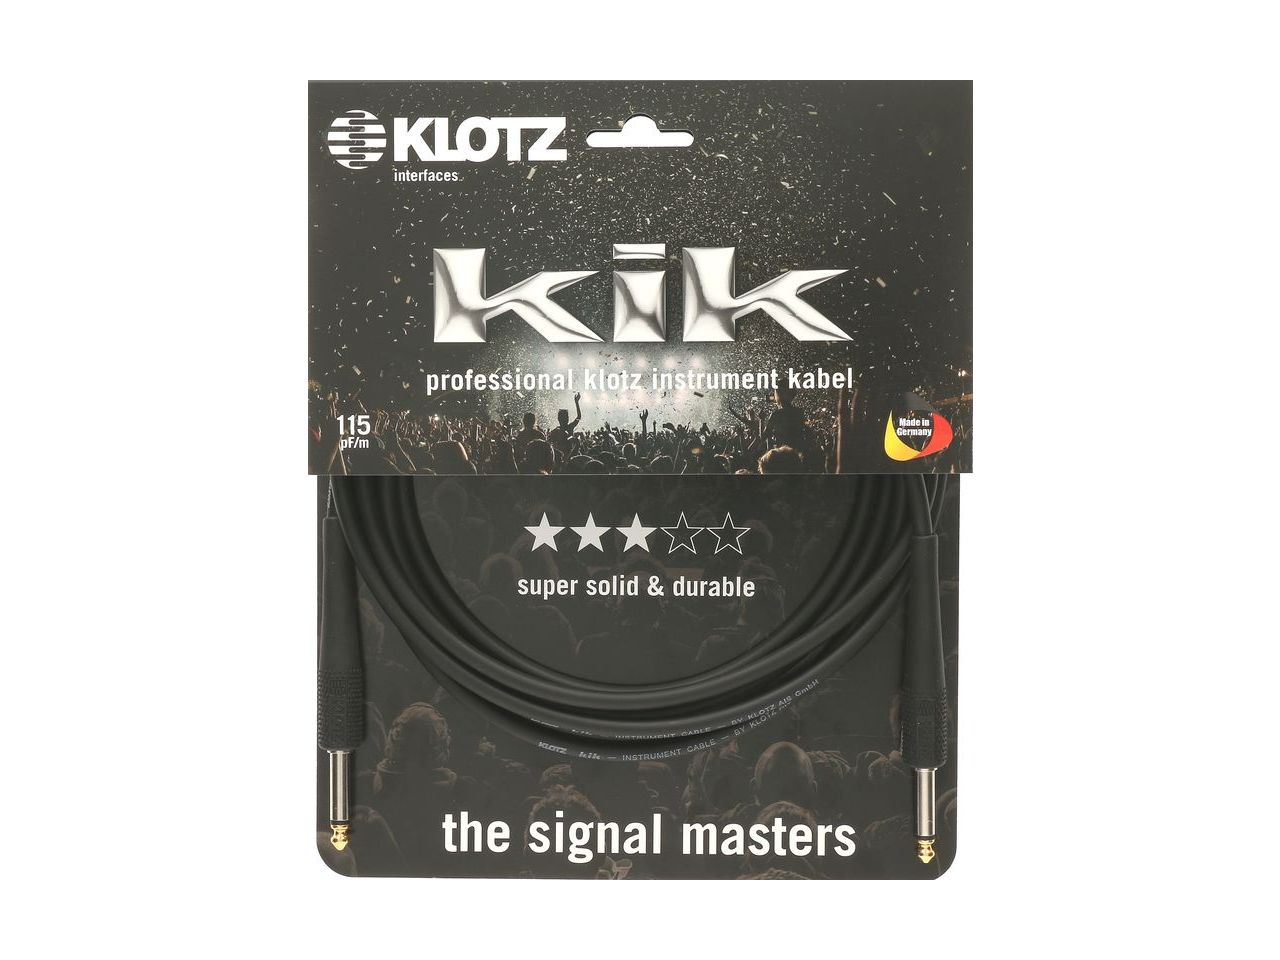 Klotz Guitar 9m (30ft) KIK Instrument Cable-Black-Klotz Gold